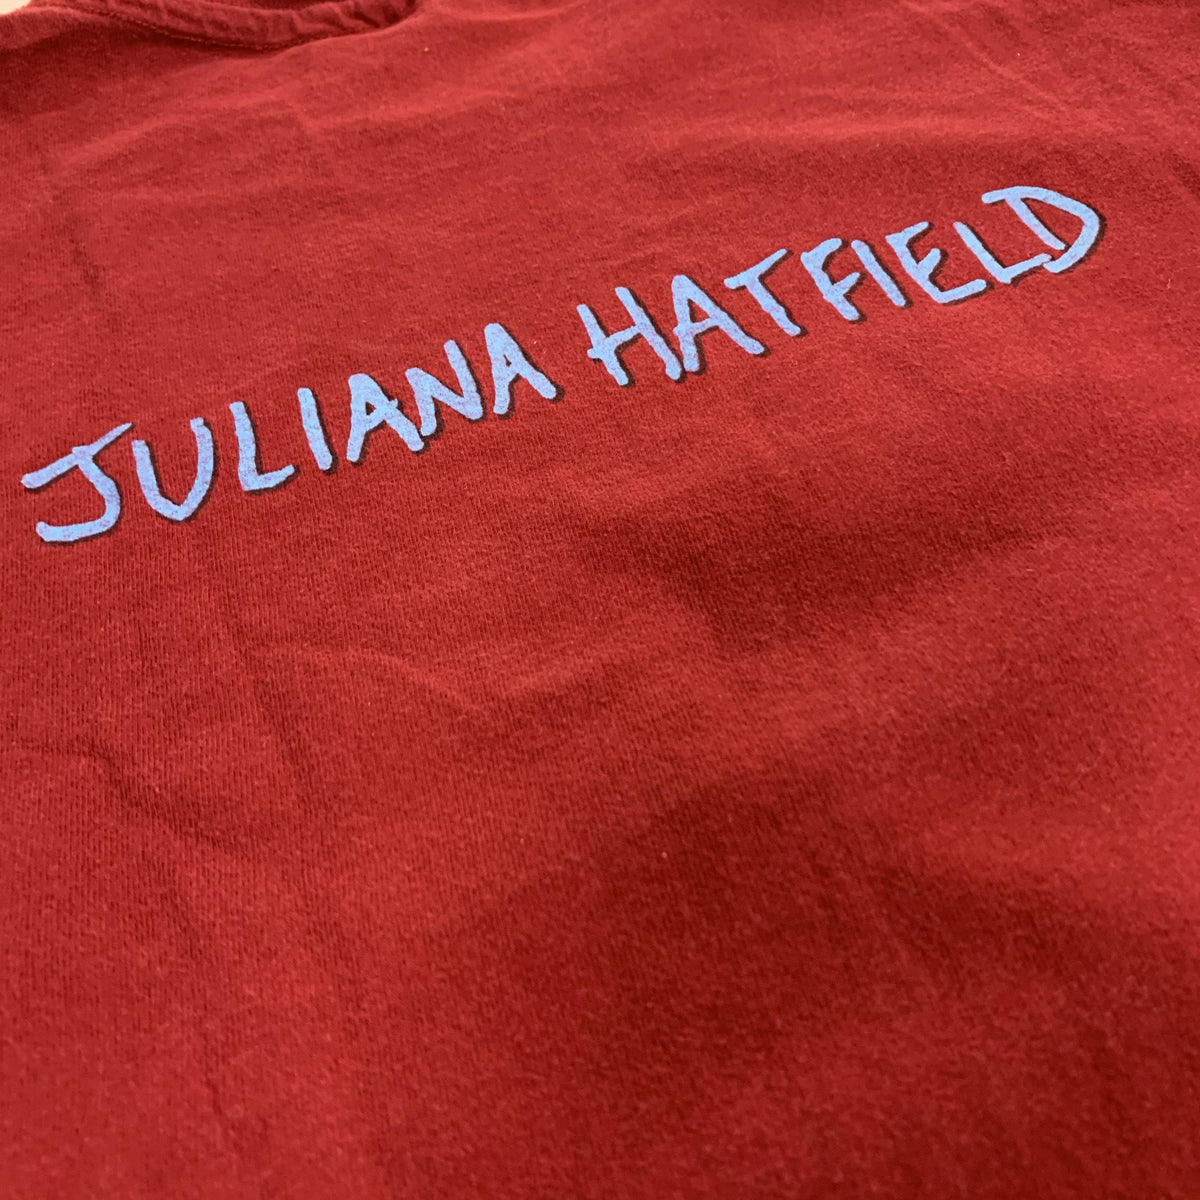 Vintage Juliana Hatfield “Ugly” T-Shirt - jointcustodydc